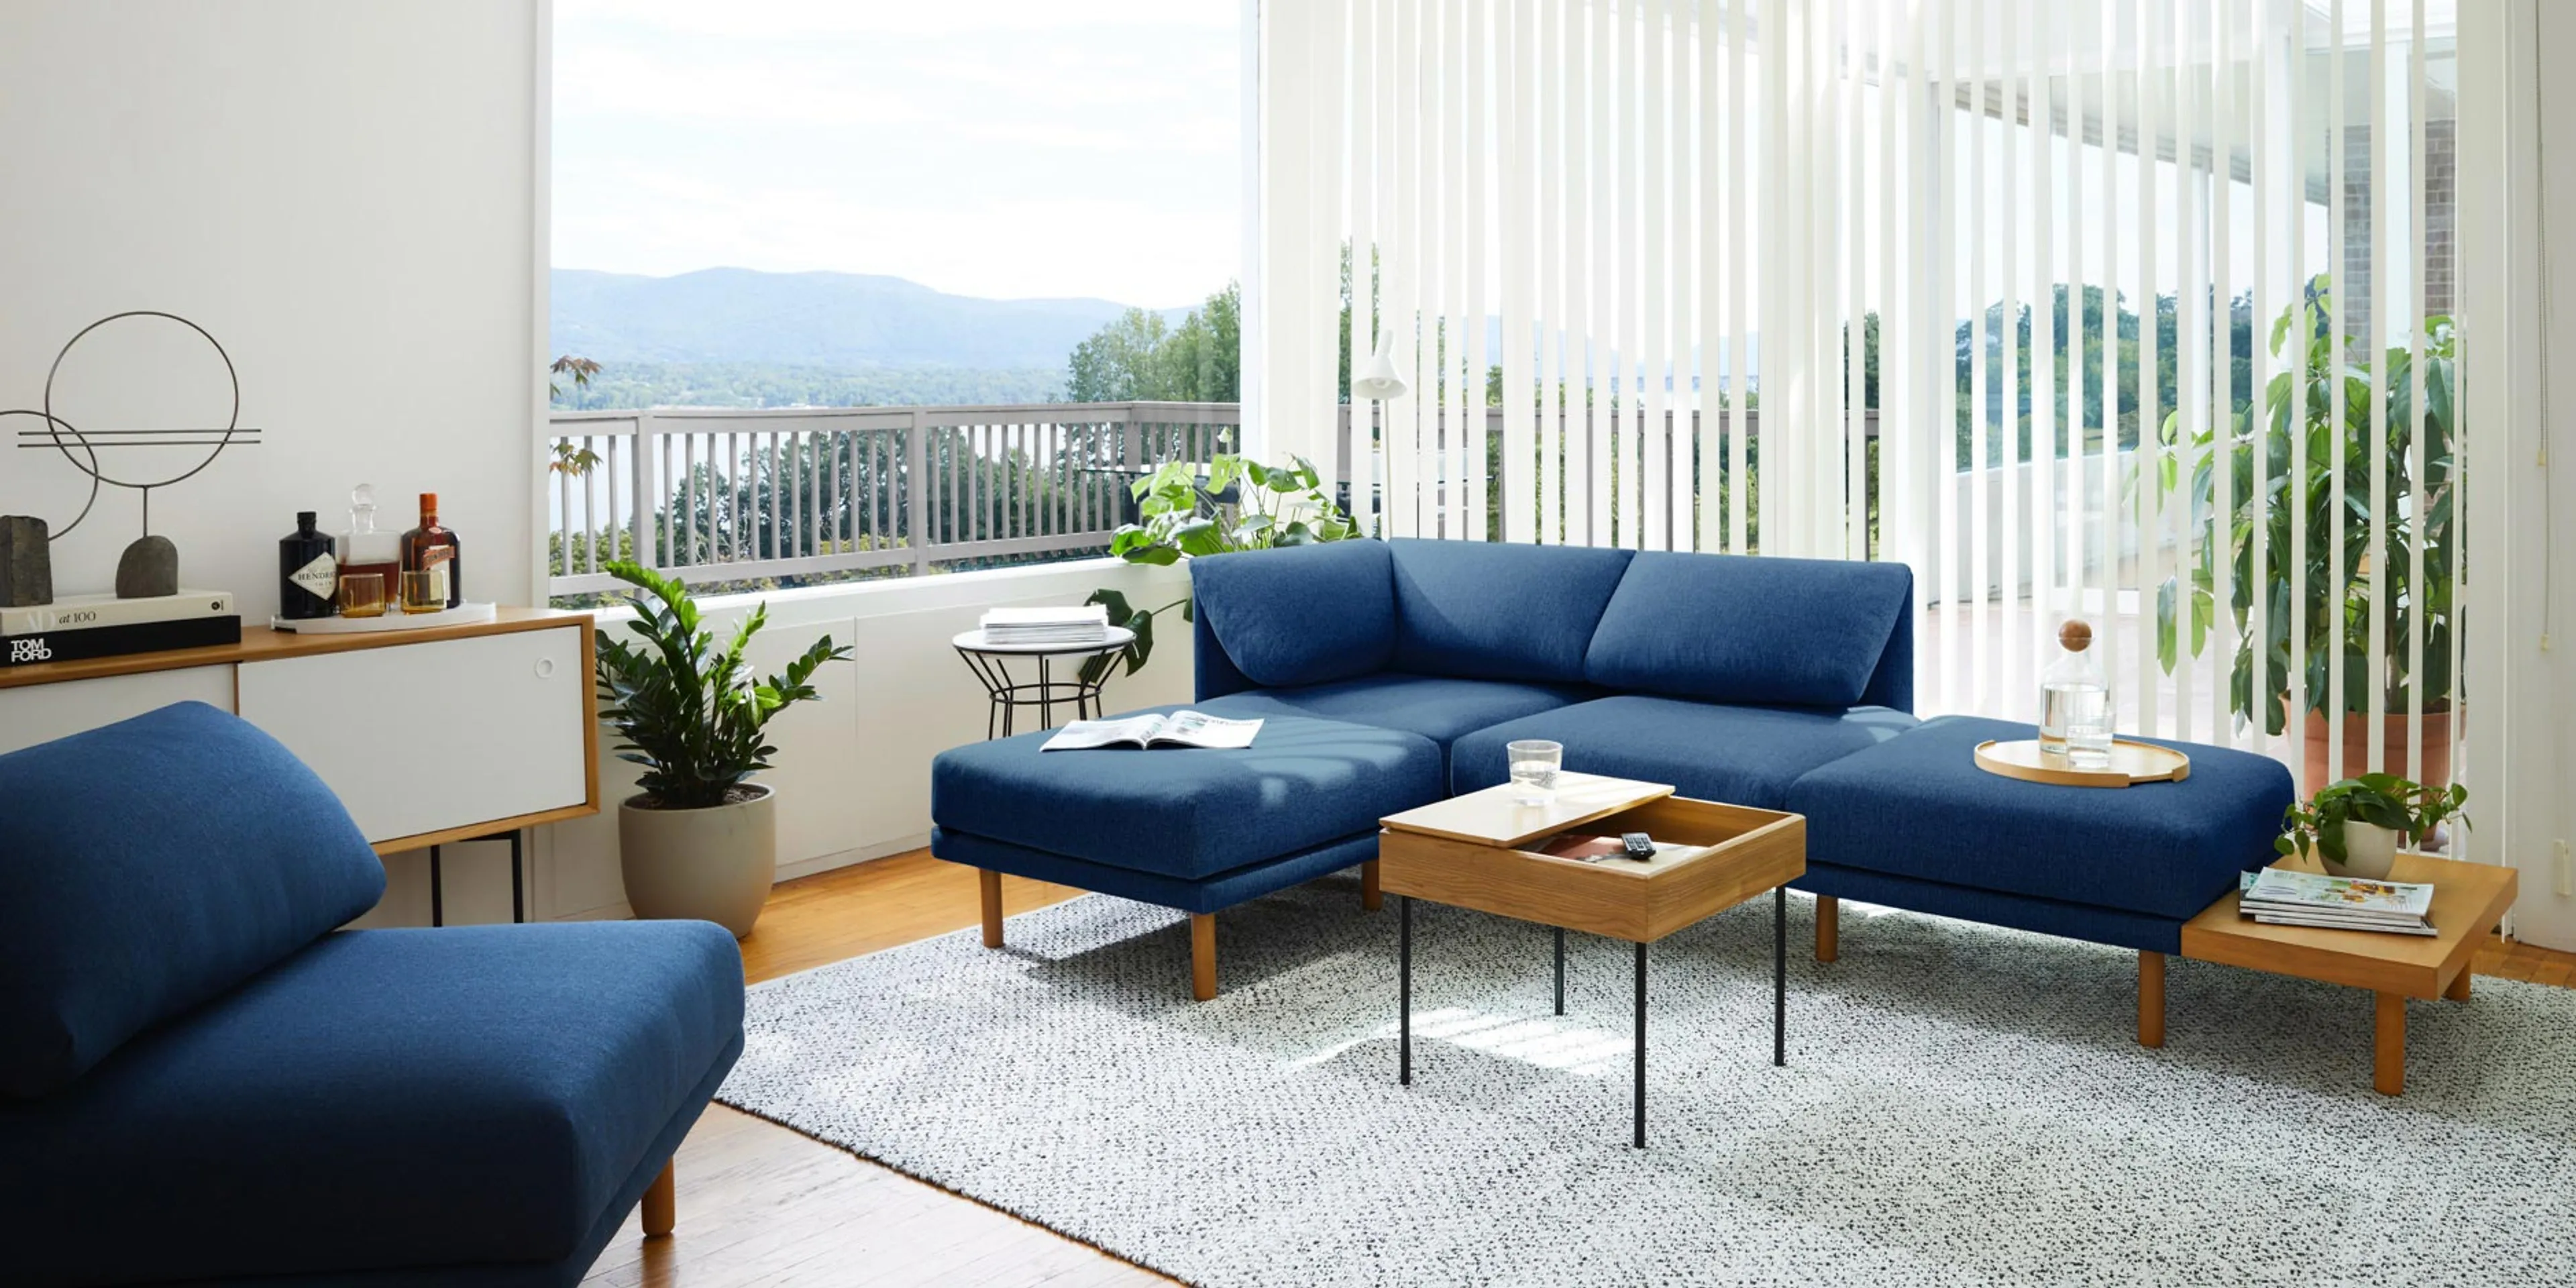 Range sectional in navy blue lighting up a modern living room